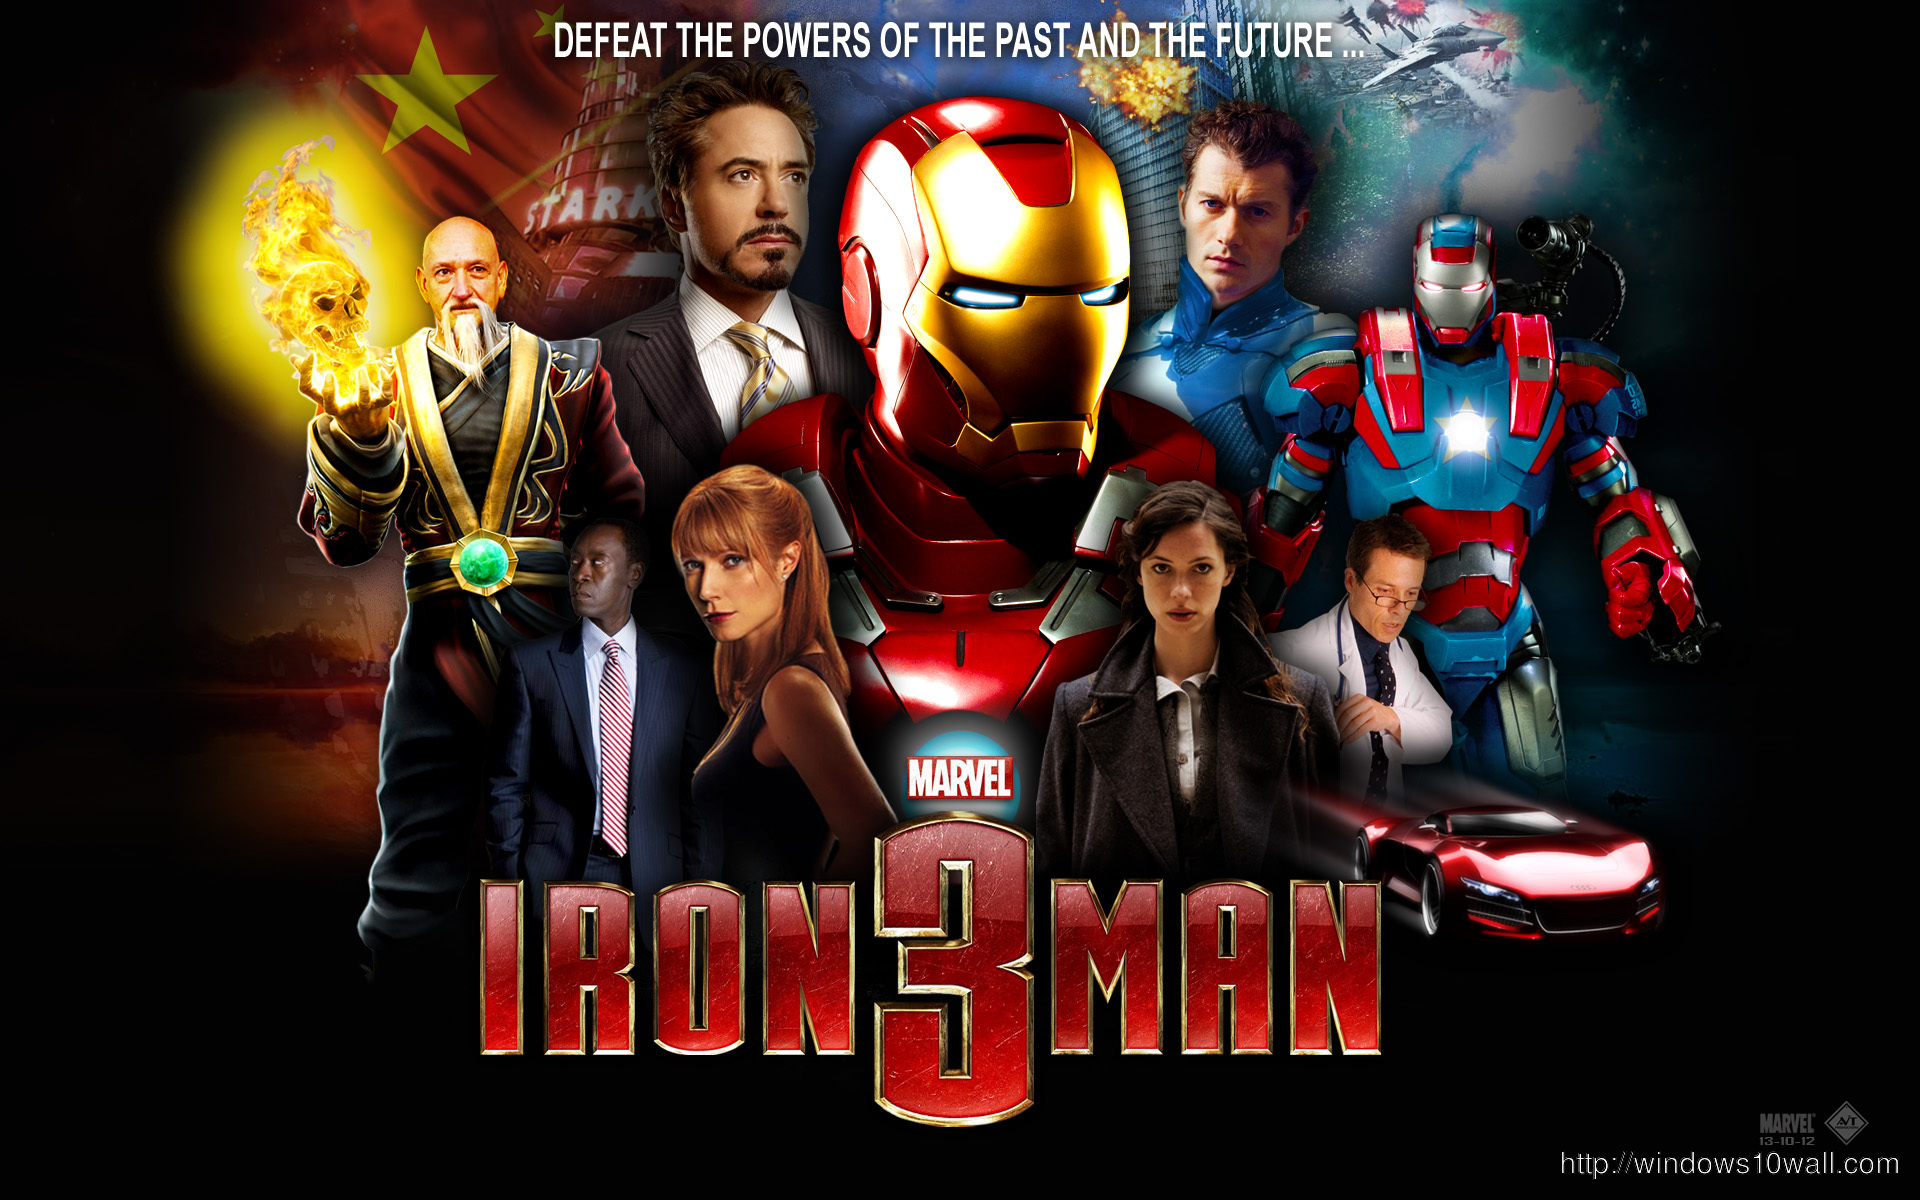 Iron Man 3 Movie wallpaper free download for iphnoes